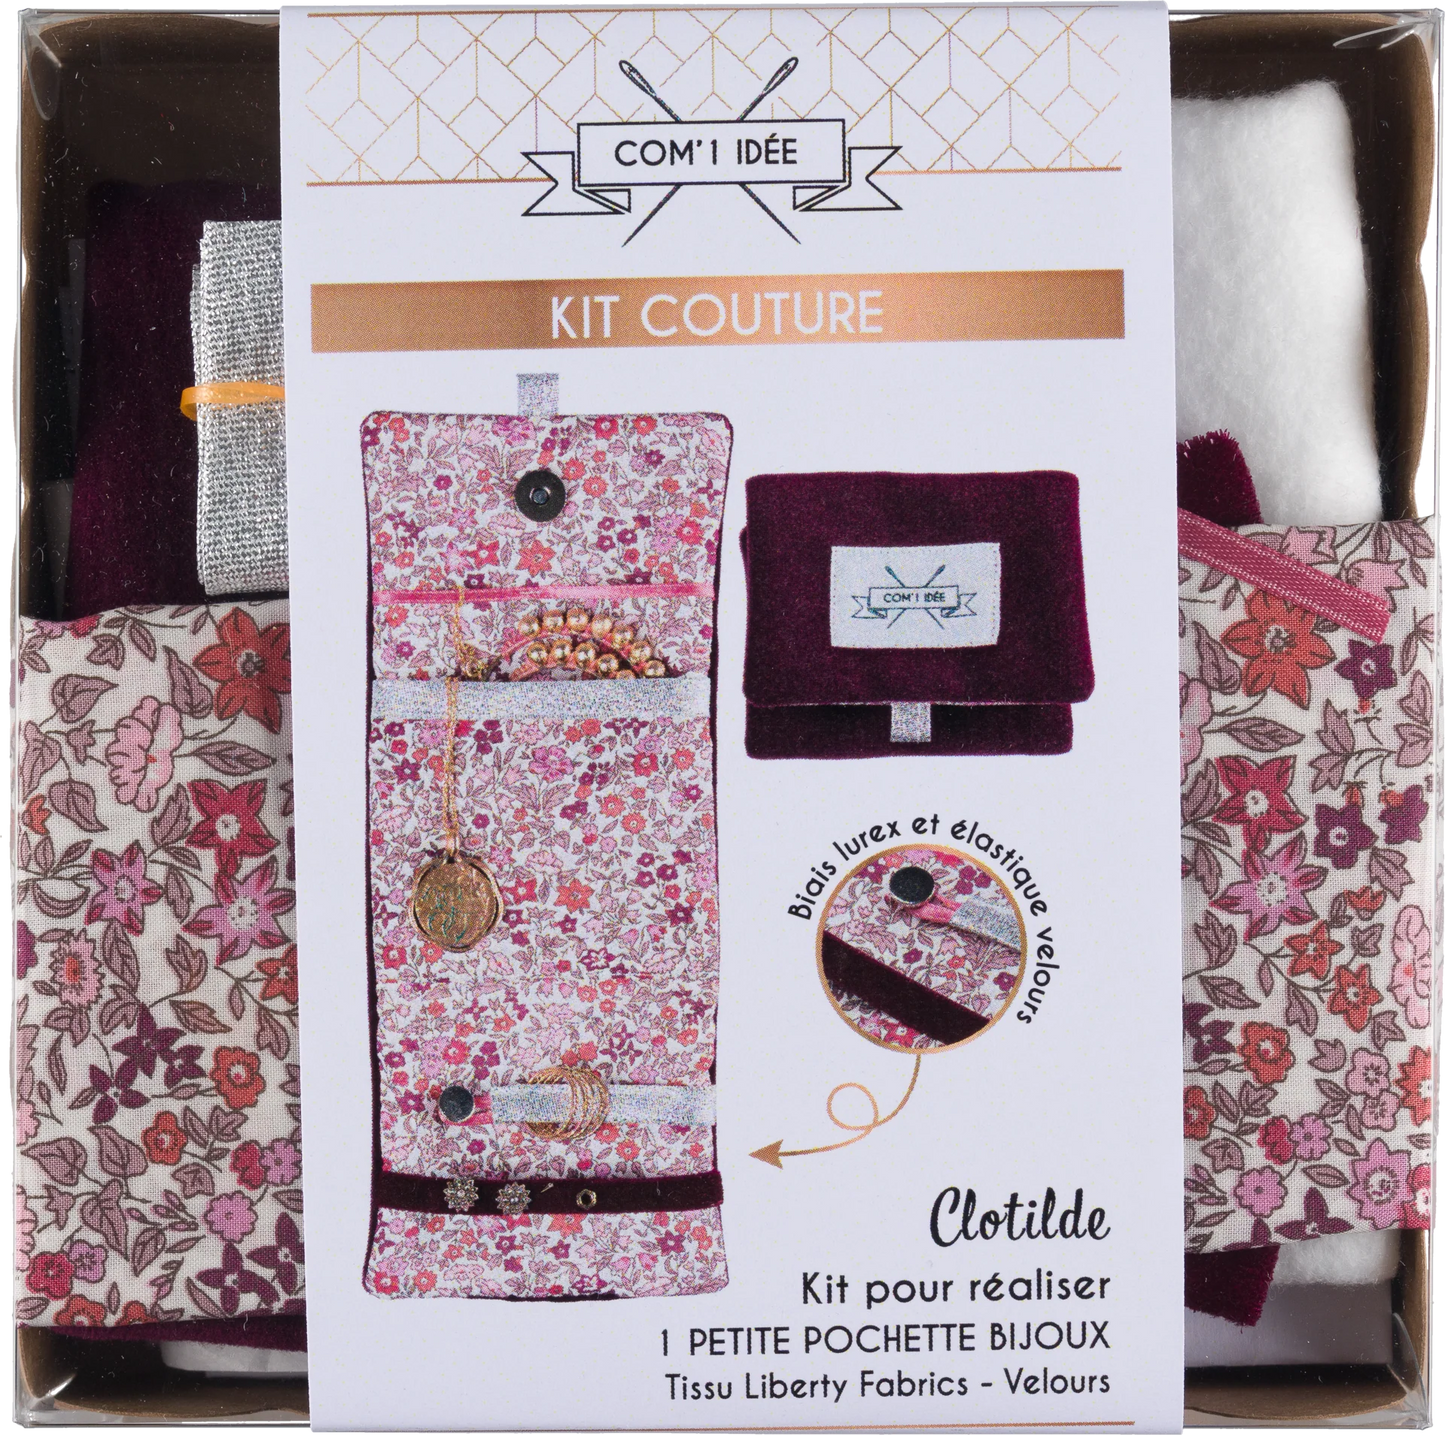 Kit petite pochette bijoux Clotilde COM'1 IDEE JOY!